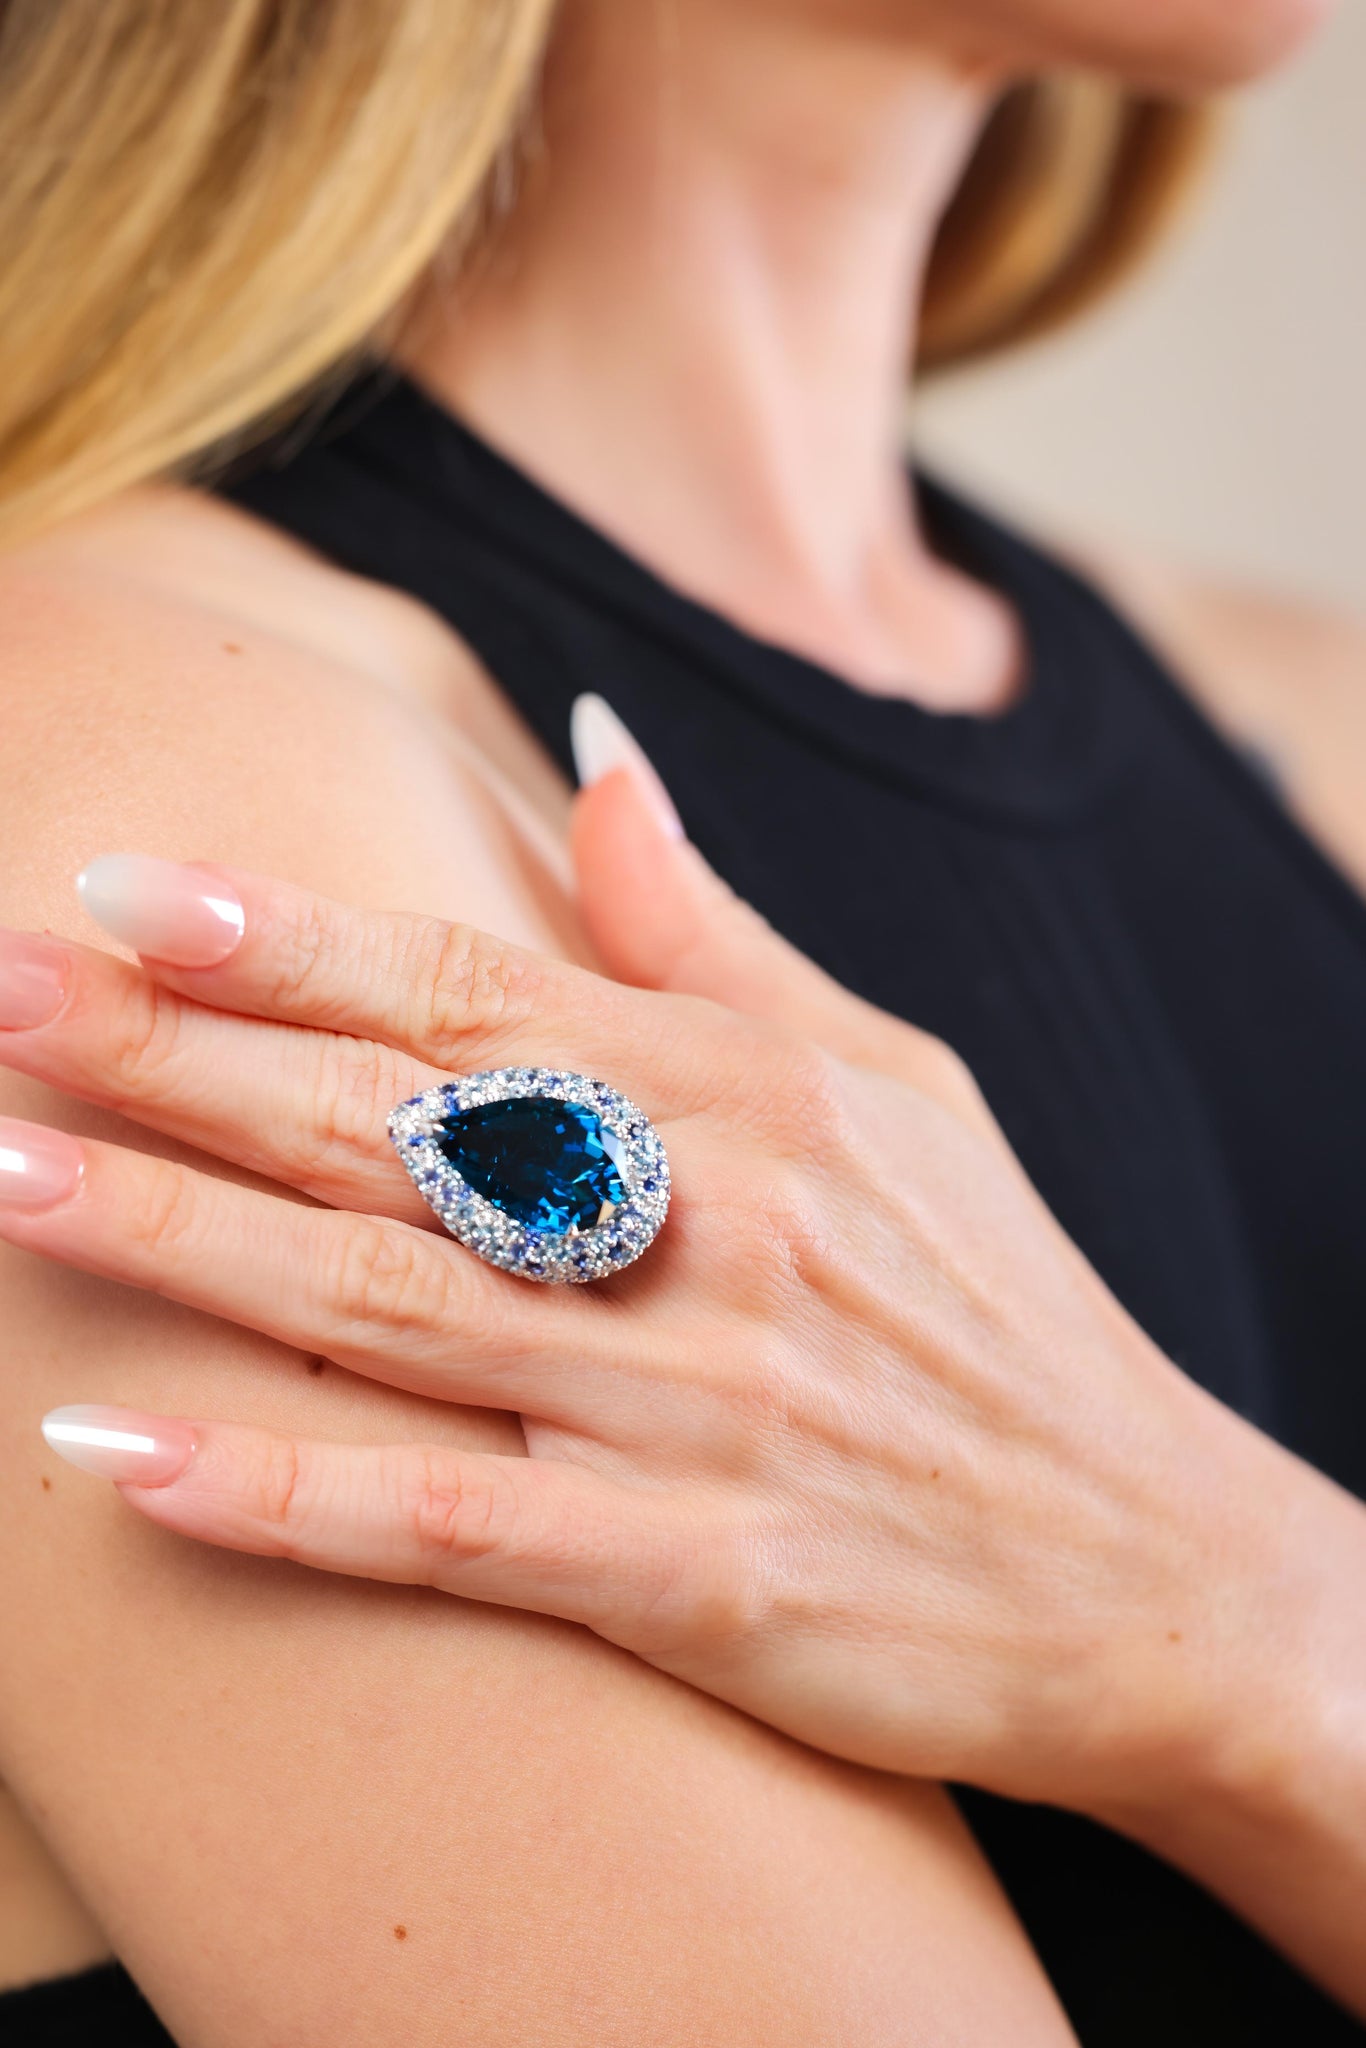 Modern 20 Carat Blue Topaz Diamond Sapphire White Gold Cocktail Ring